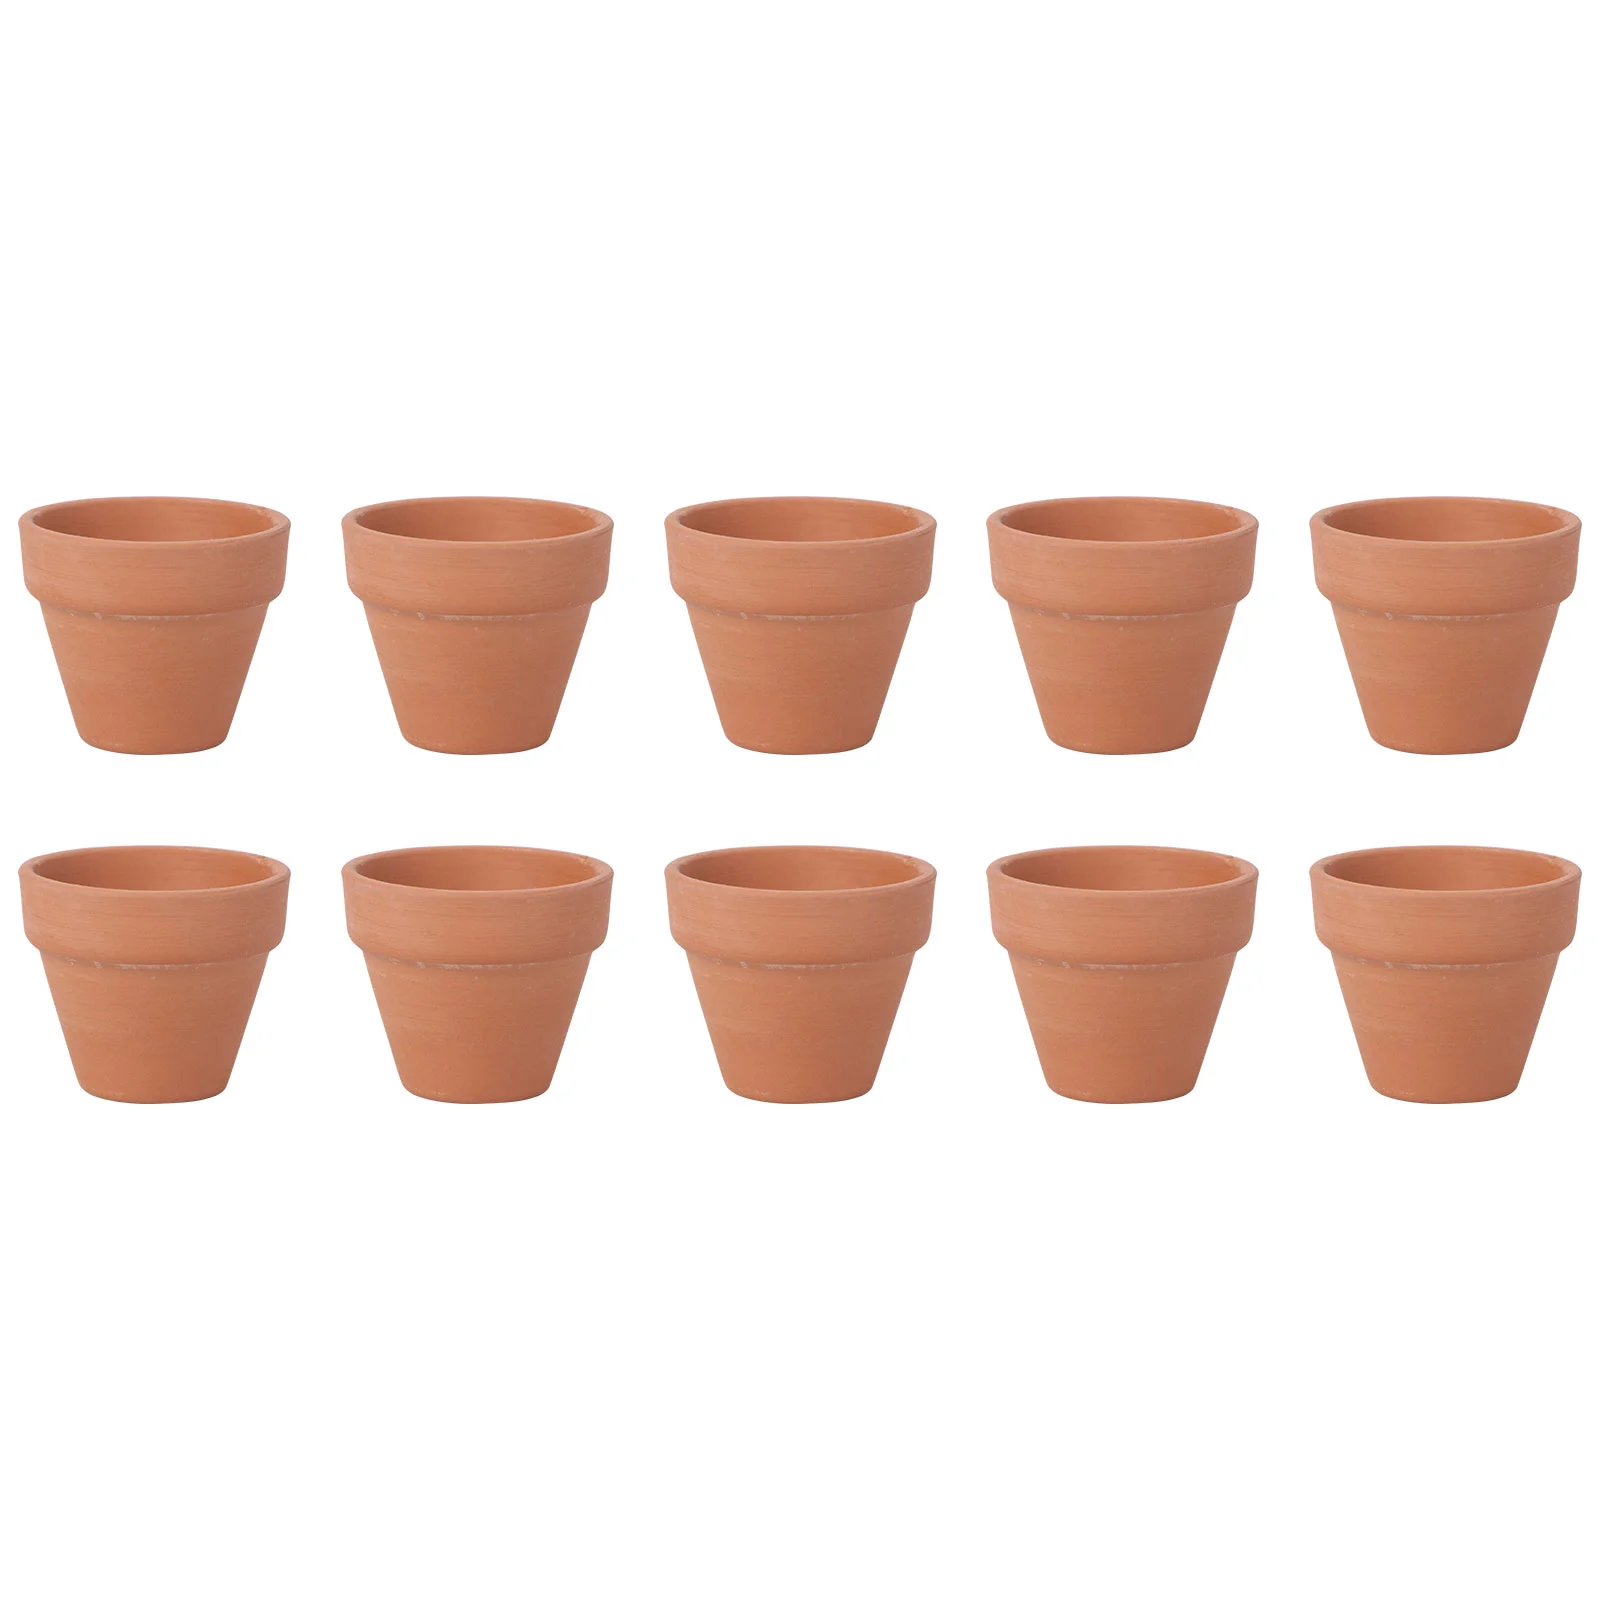 

4.5x4cm Small Mini Terracotta Pot Clay Ceramic Pottery Planter Flower Pots Succulent Nursery Pots Great For Plants Crafts